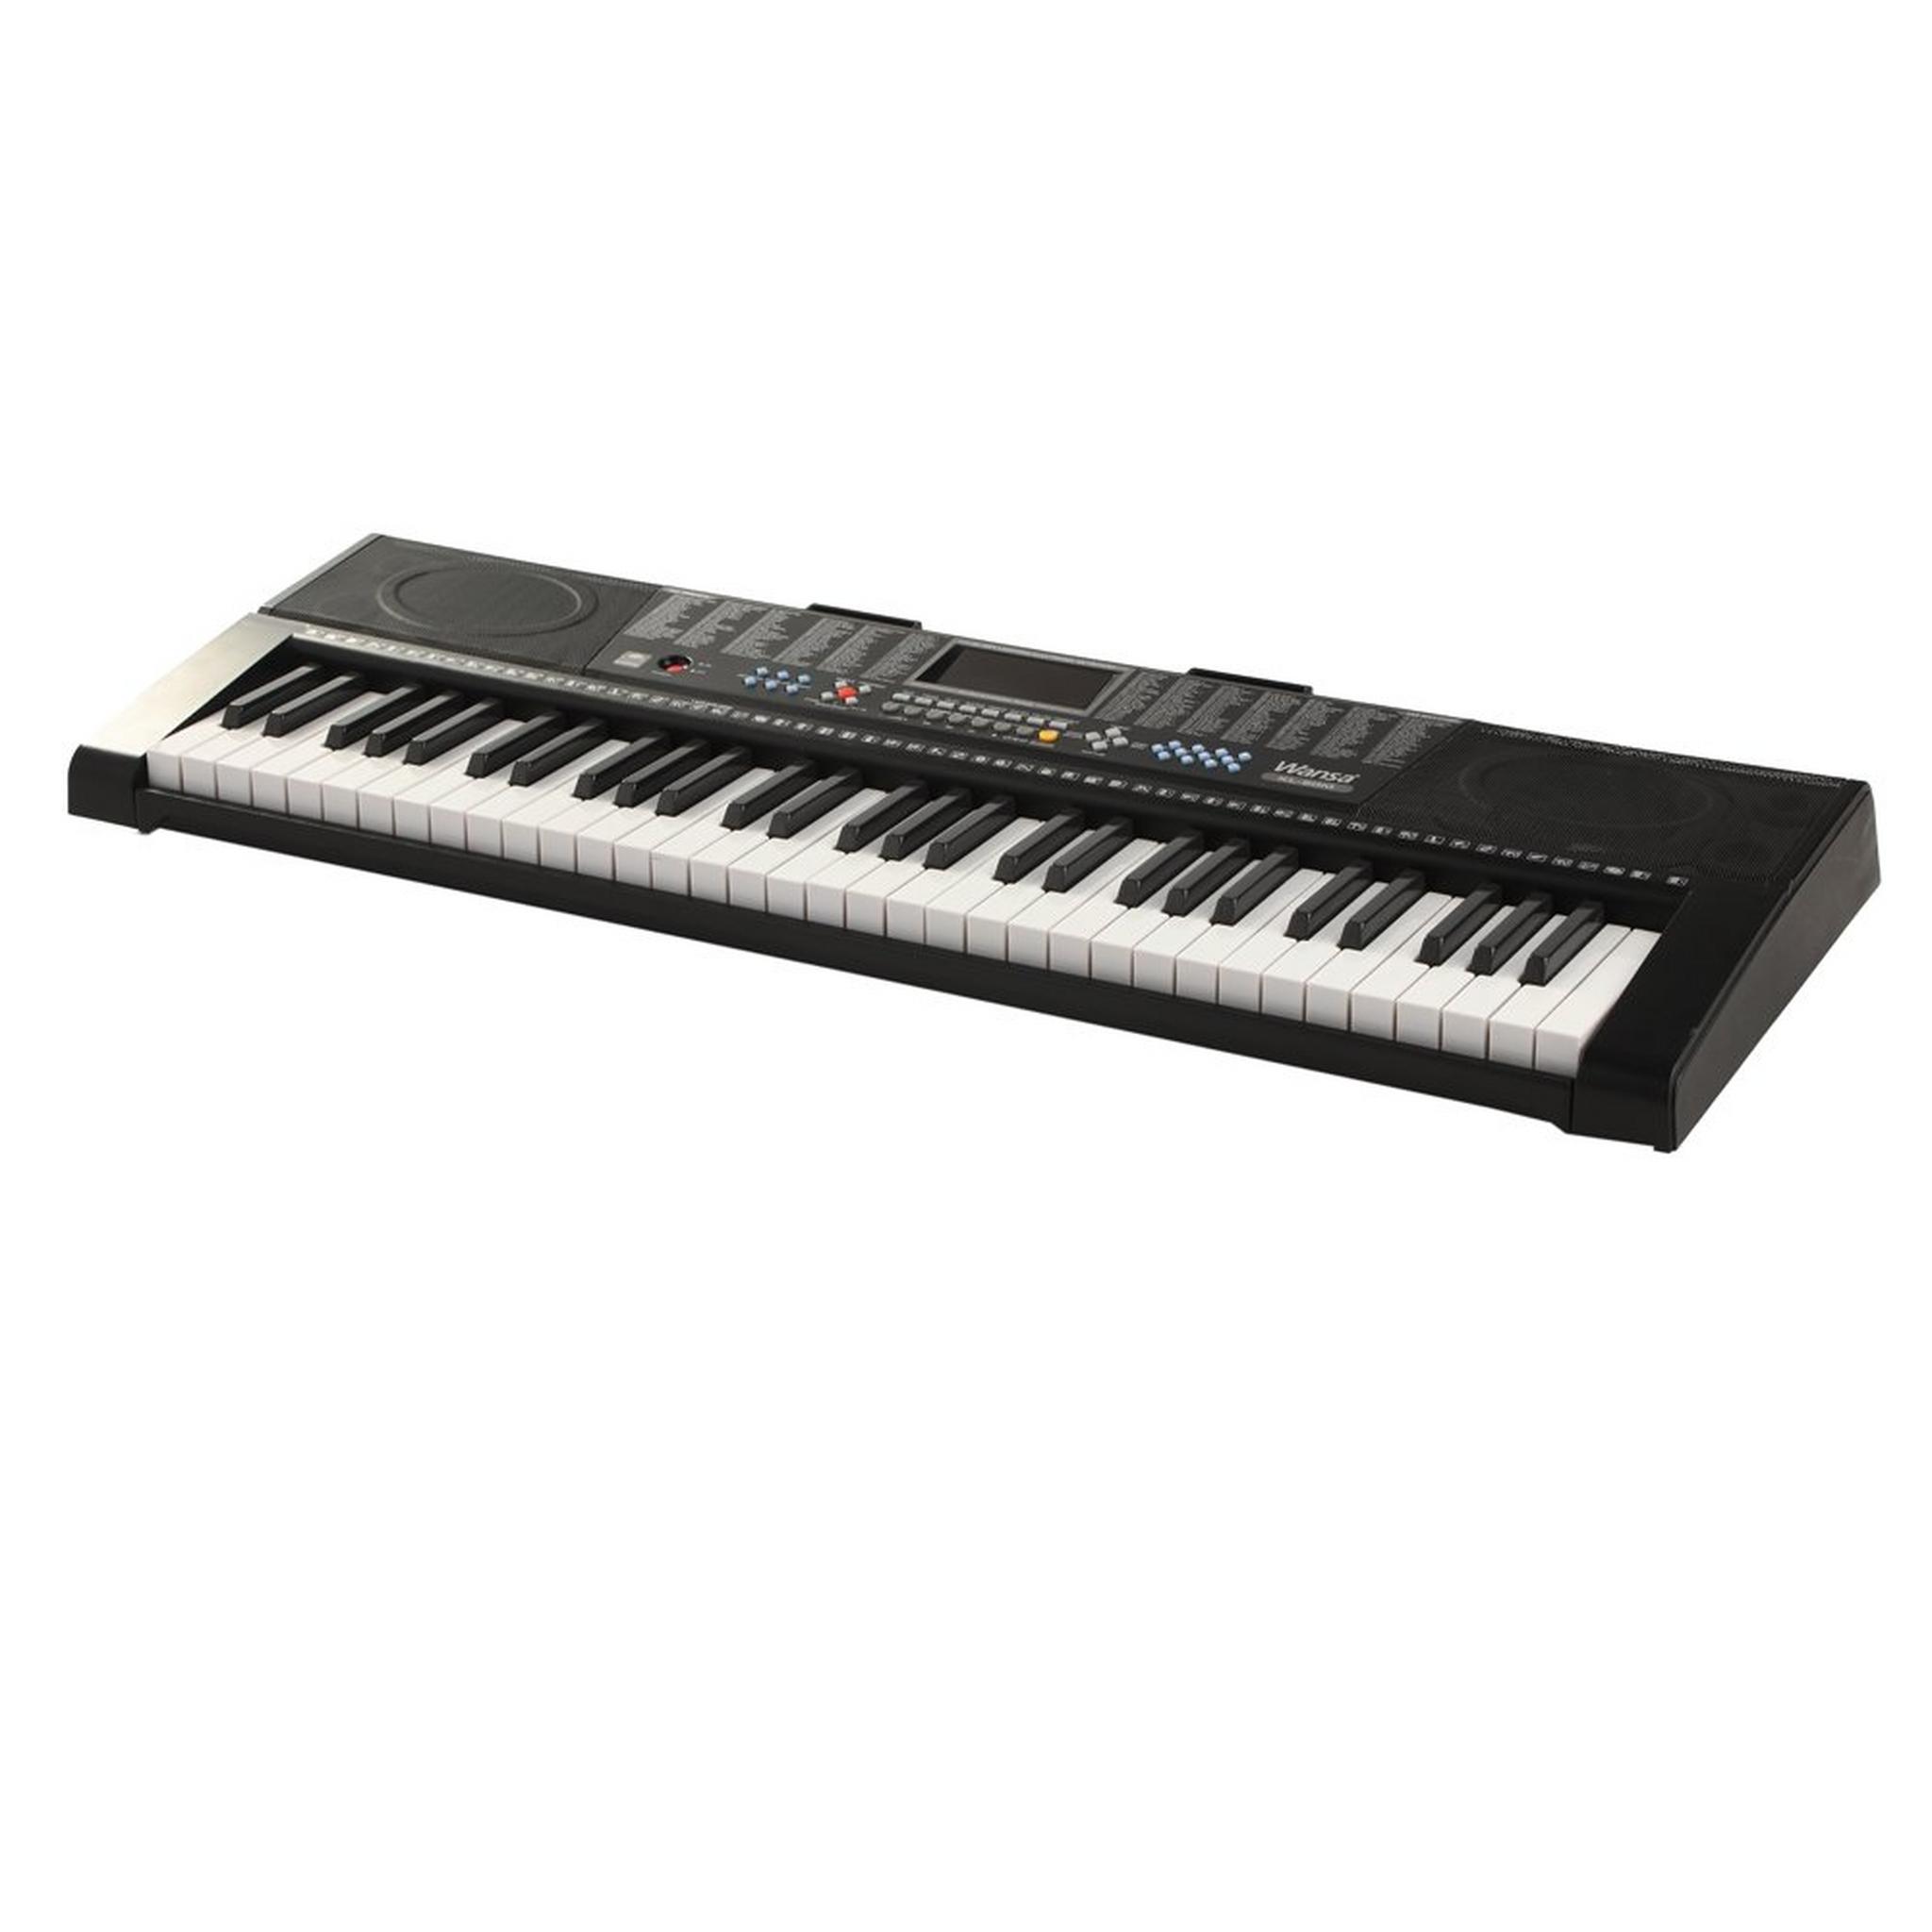 Wansa 61 Keys Musical Keyboard - KL-90M